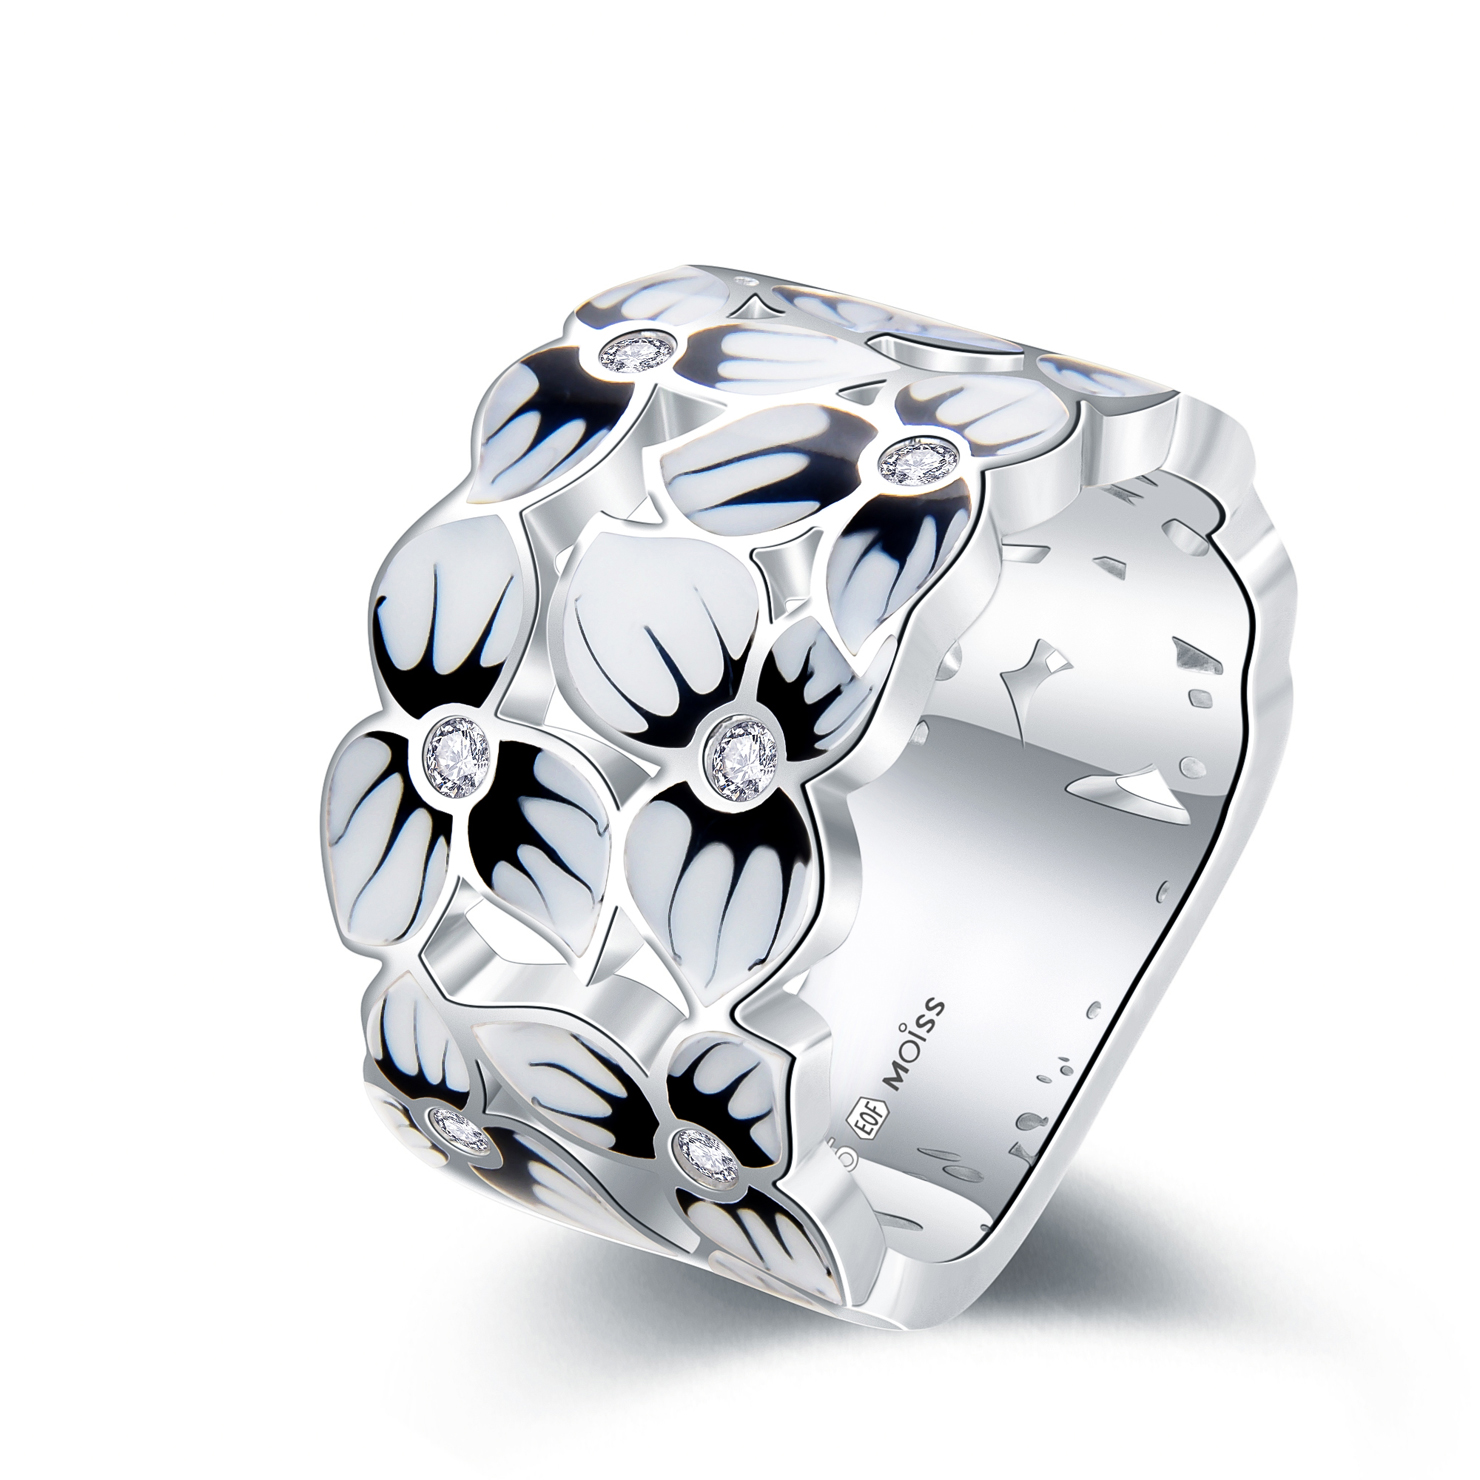 MOISS Moiss stříbrný prsten KVĚTINY smalt R0001531 Velikost 57 mm R0001532